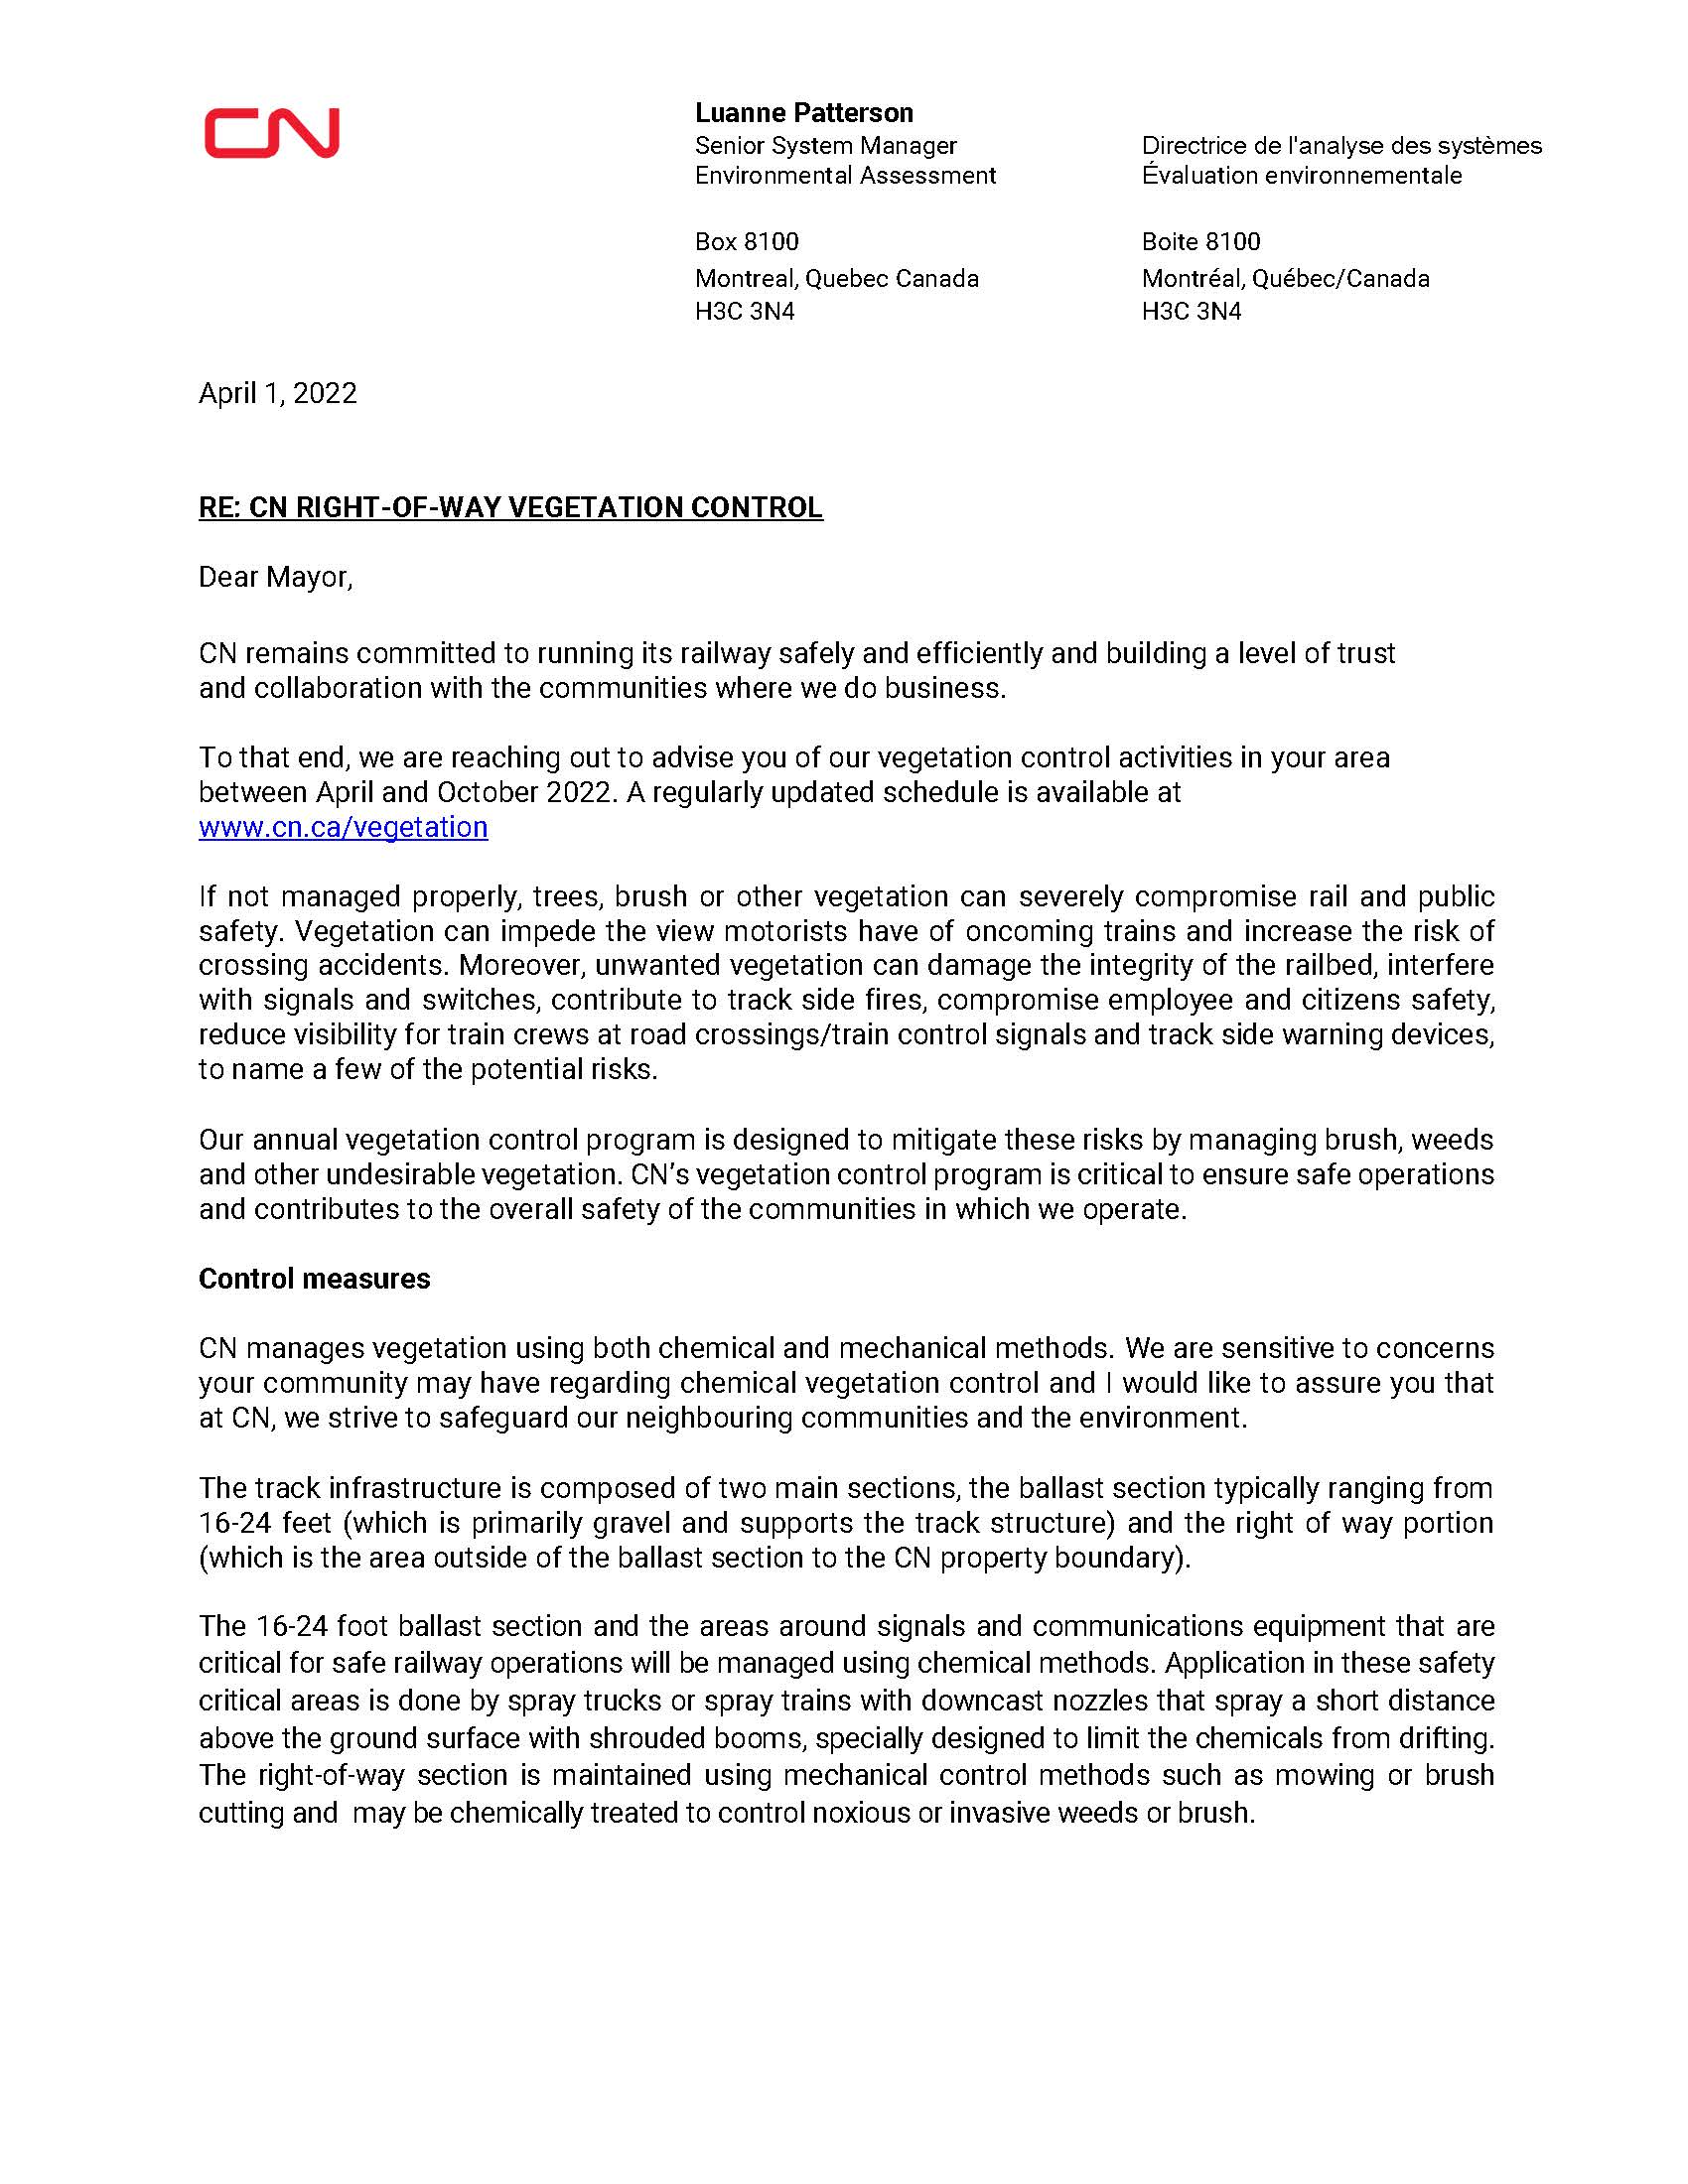 2022 CN vegetation program notice. Page 01